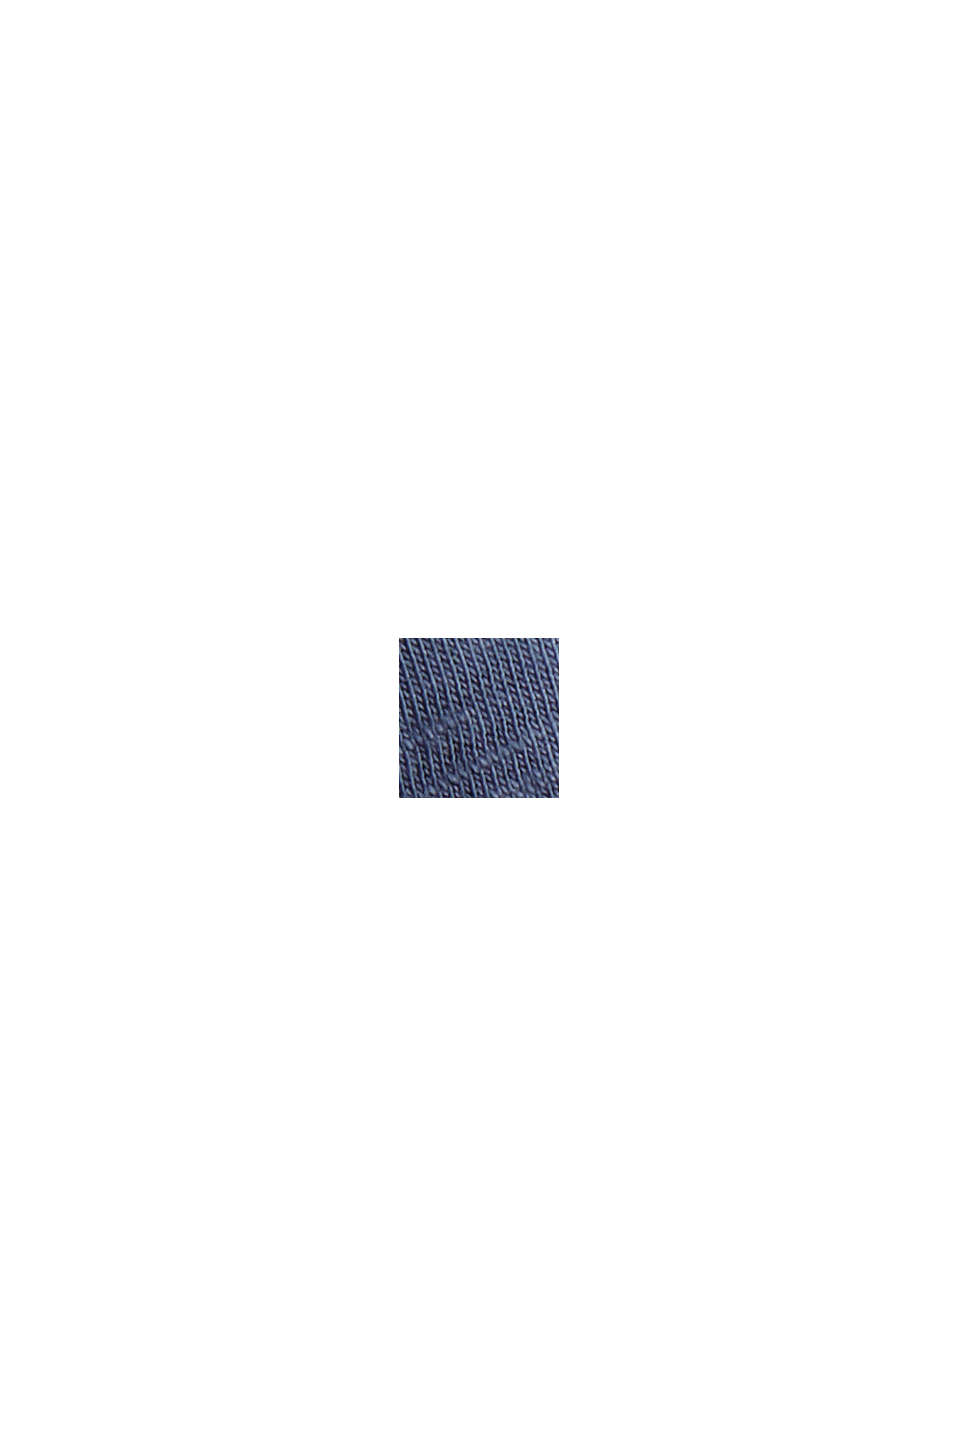 Tričko henley s dlouhým rukávem, ze 100% bio bavlny, GREY BLUE, swatch